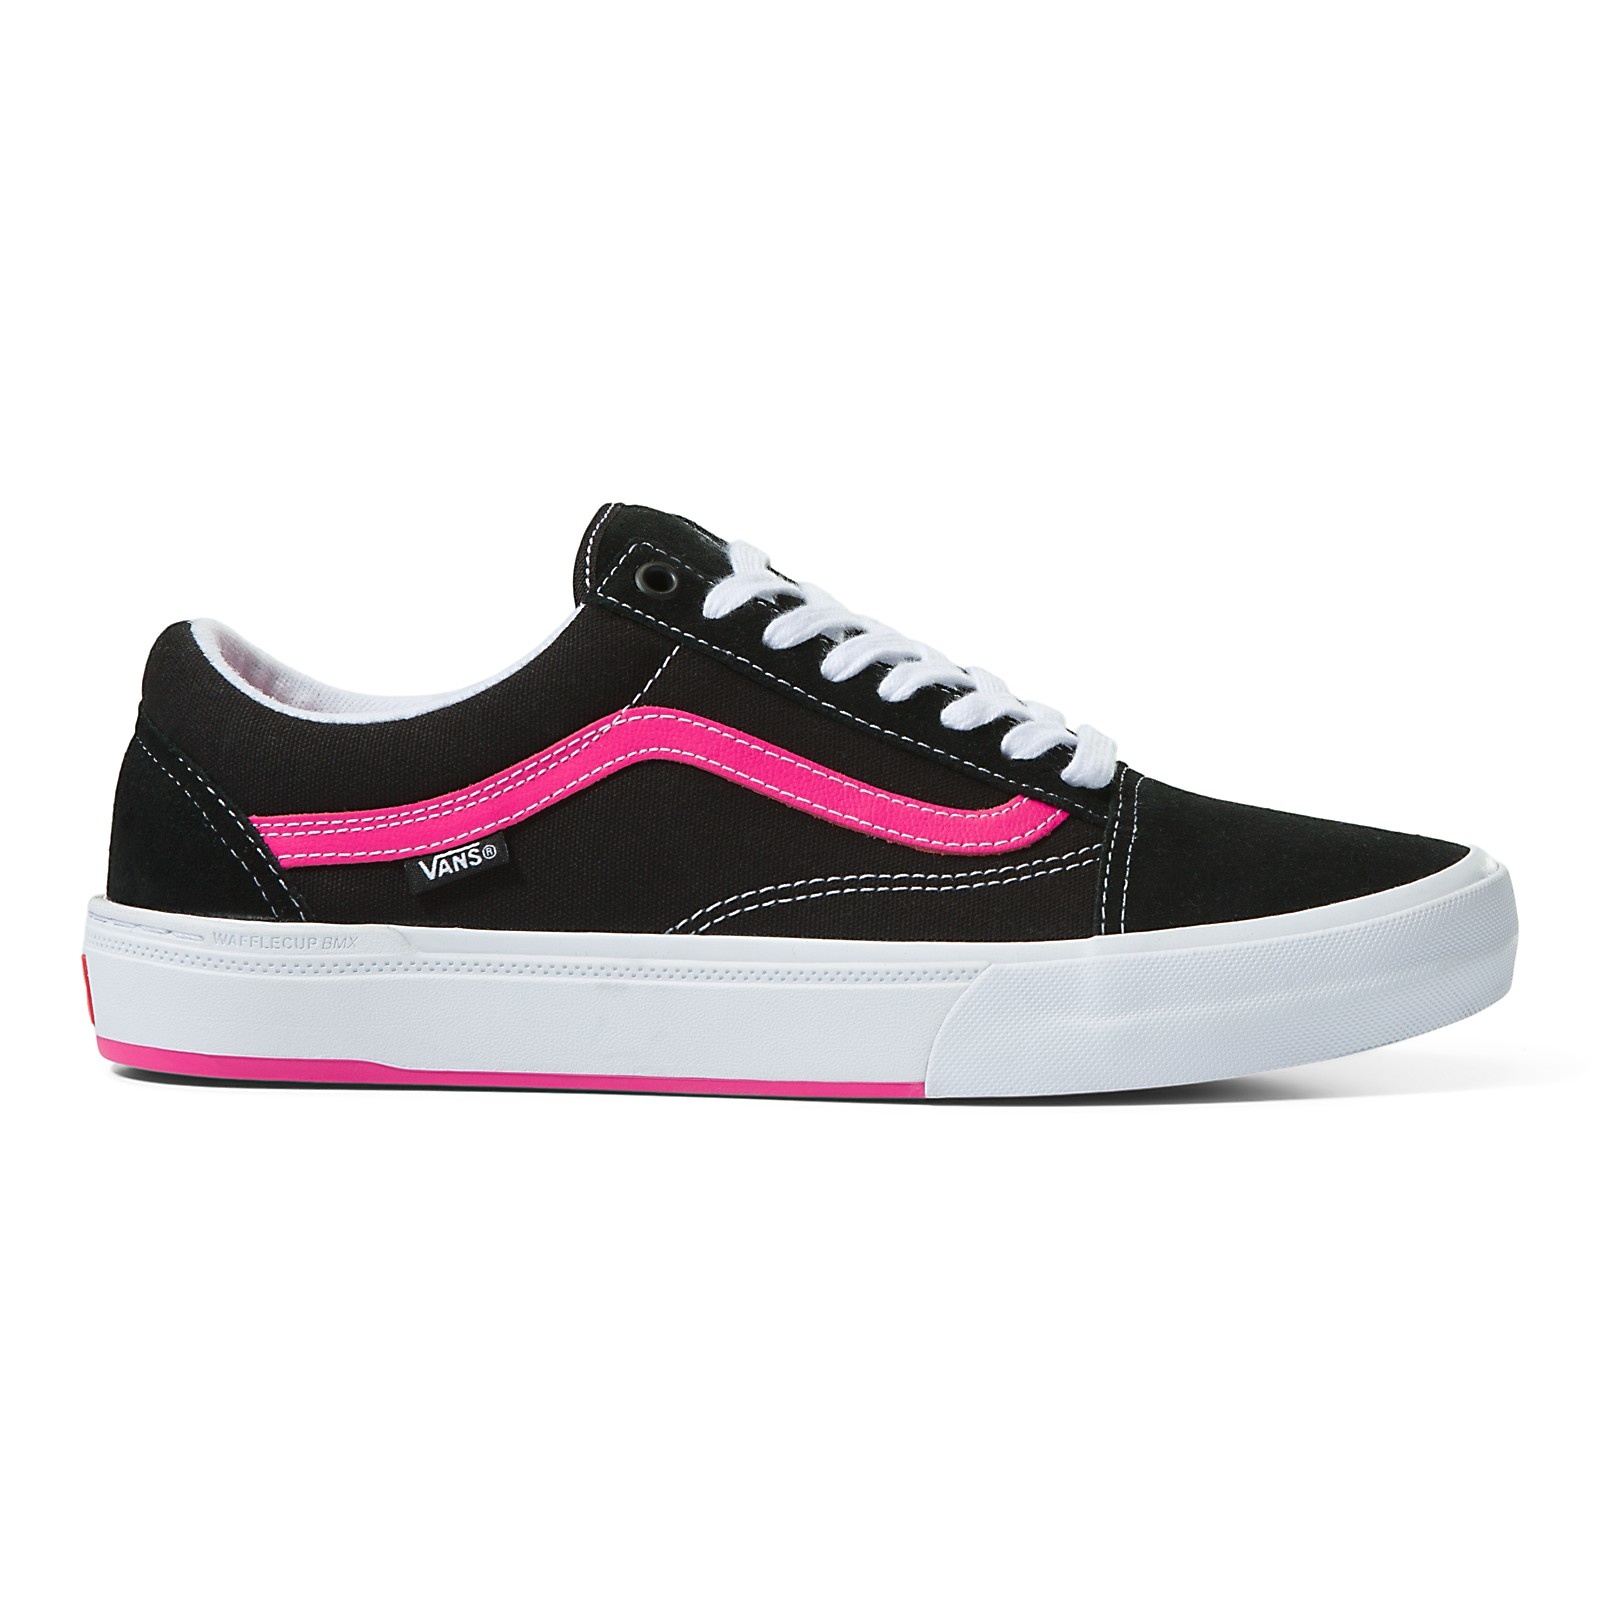 Vans BMX Old Skool Shoe - Black/Neon Pink